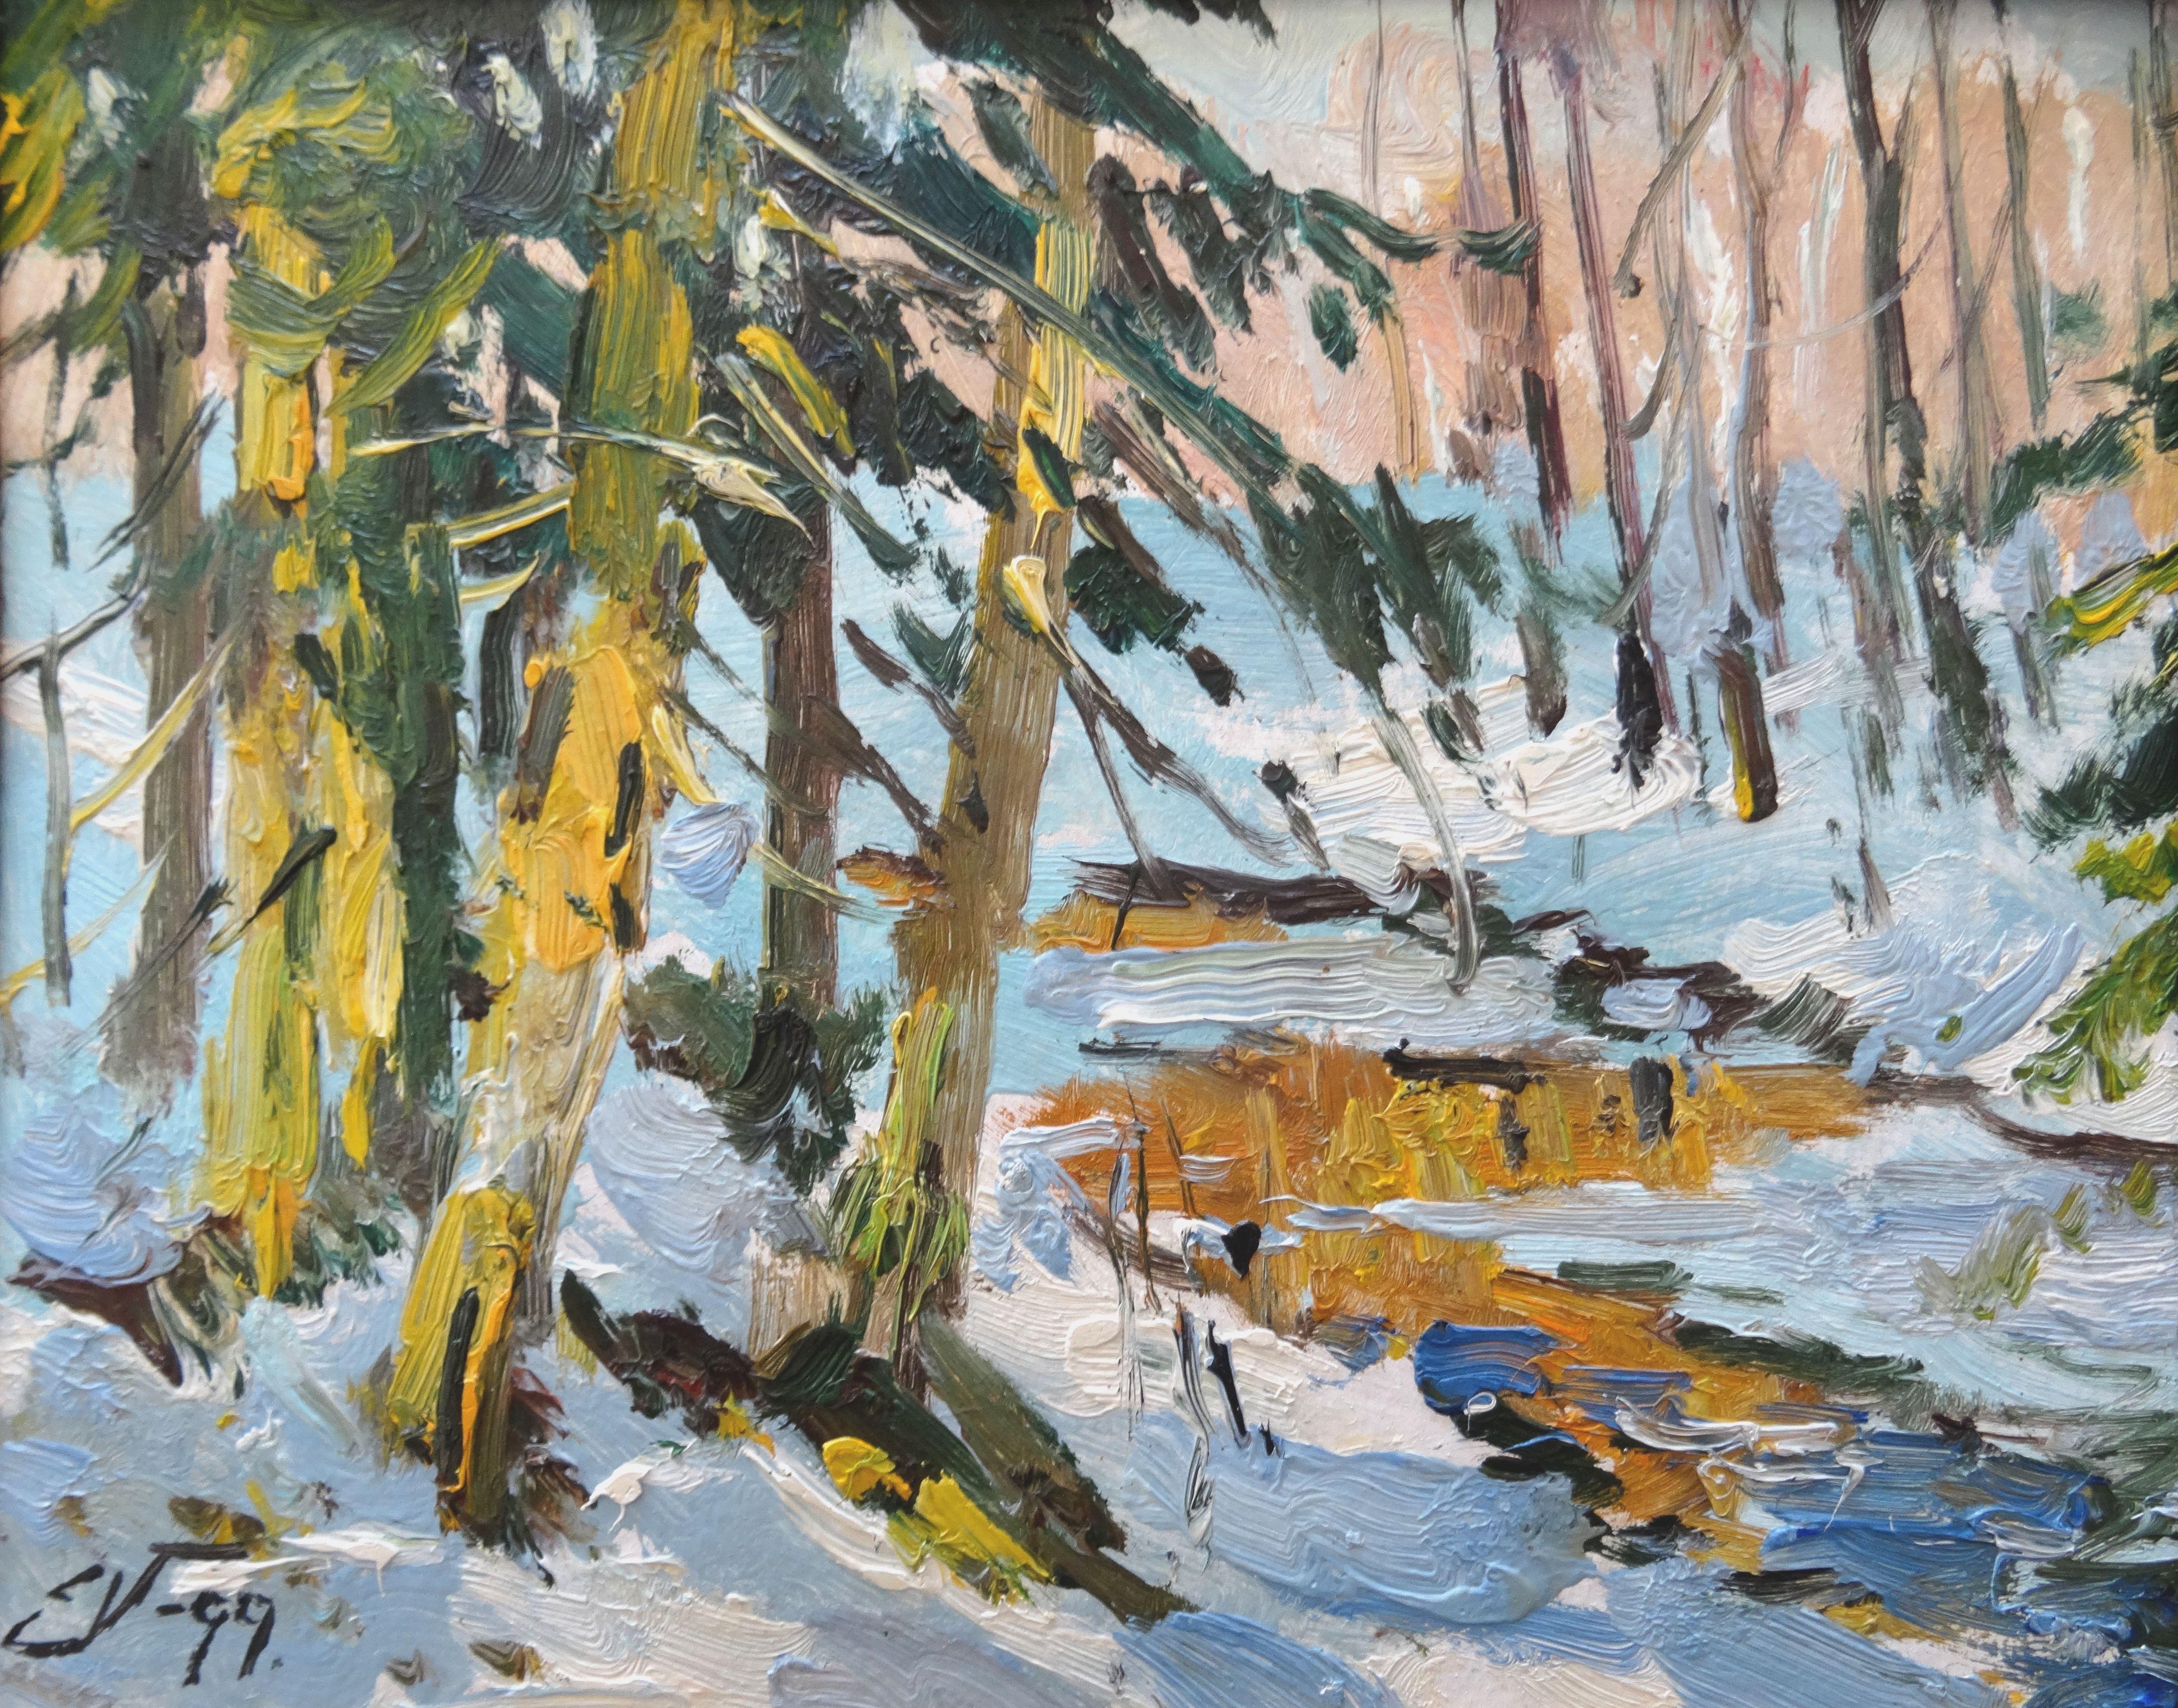 Edgars Vinters Landscape Art - Sun at winter forest. 1999. Oil on cardboard, 25x30 cm